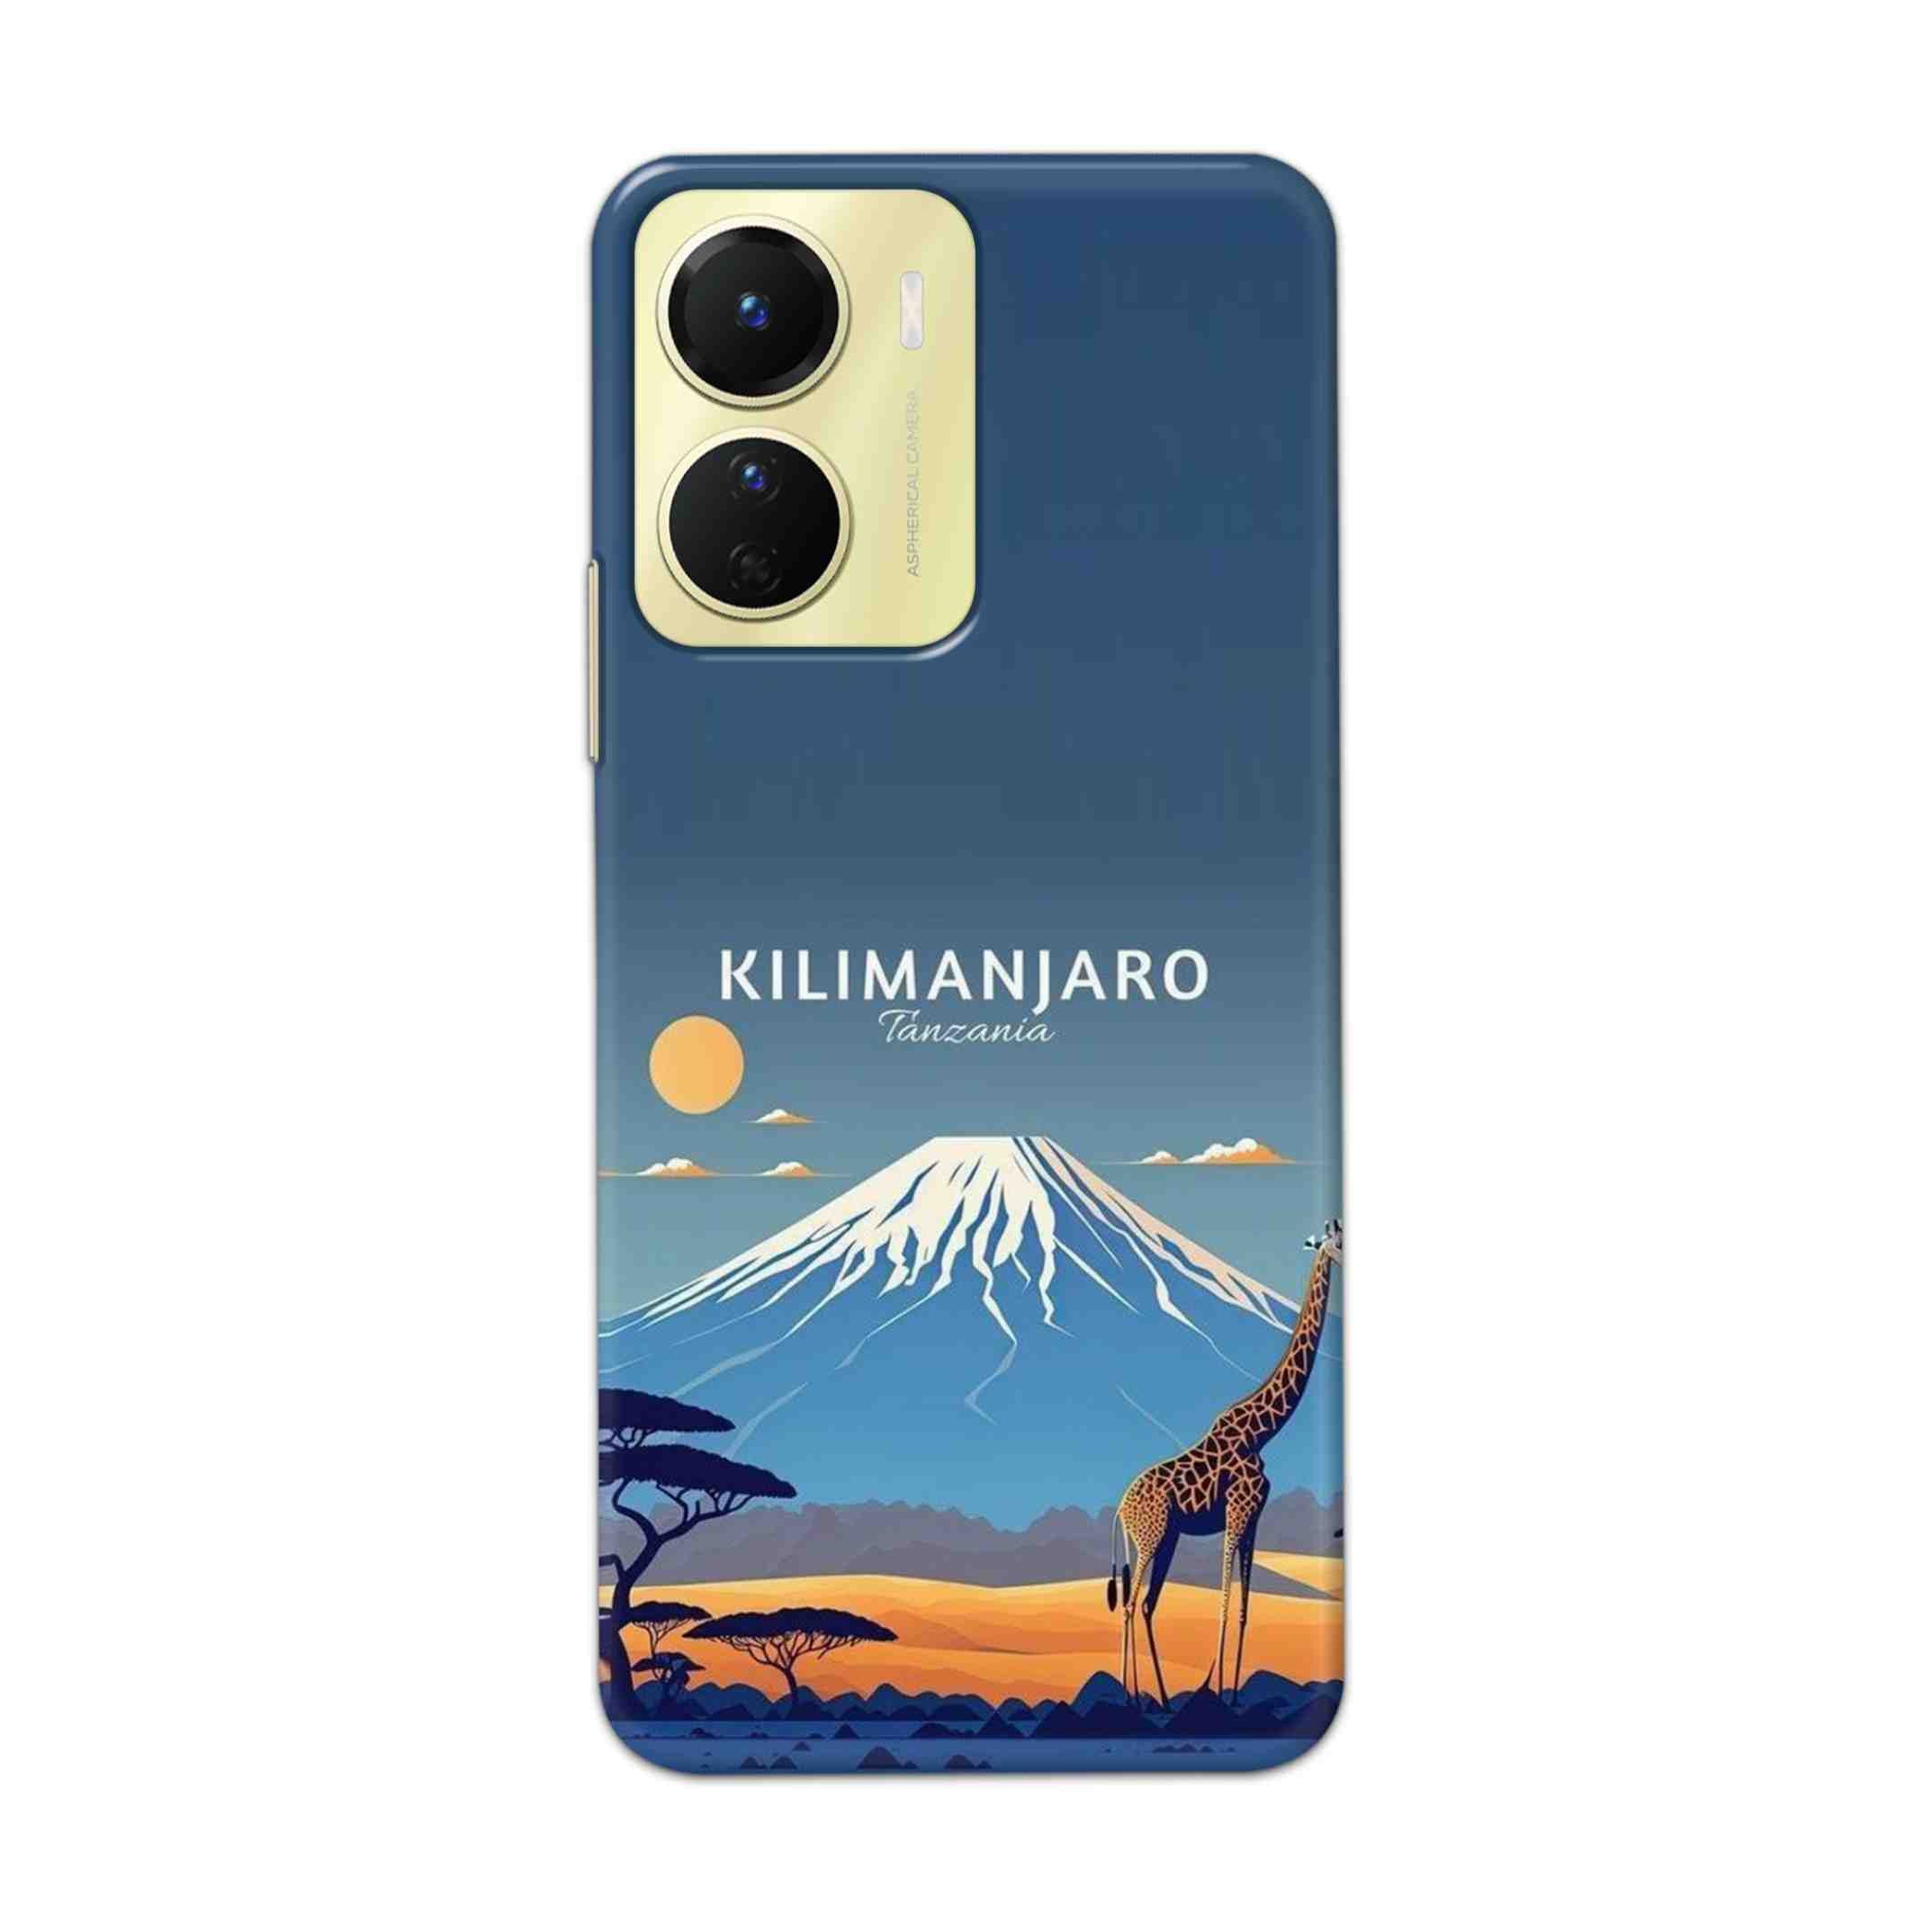 Buy Kilimanjaro Hard Back Mobile Phone Case Cover For Vivo Y16 Online